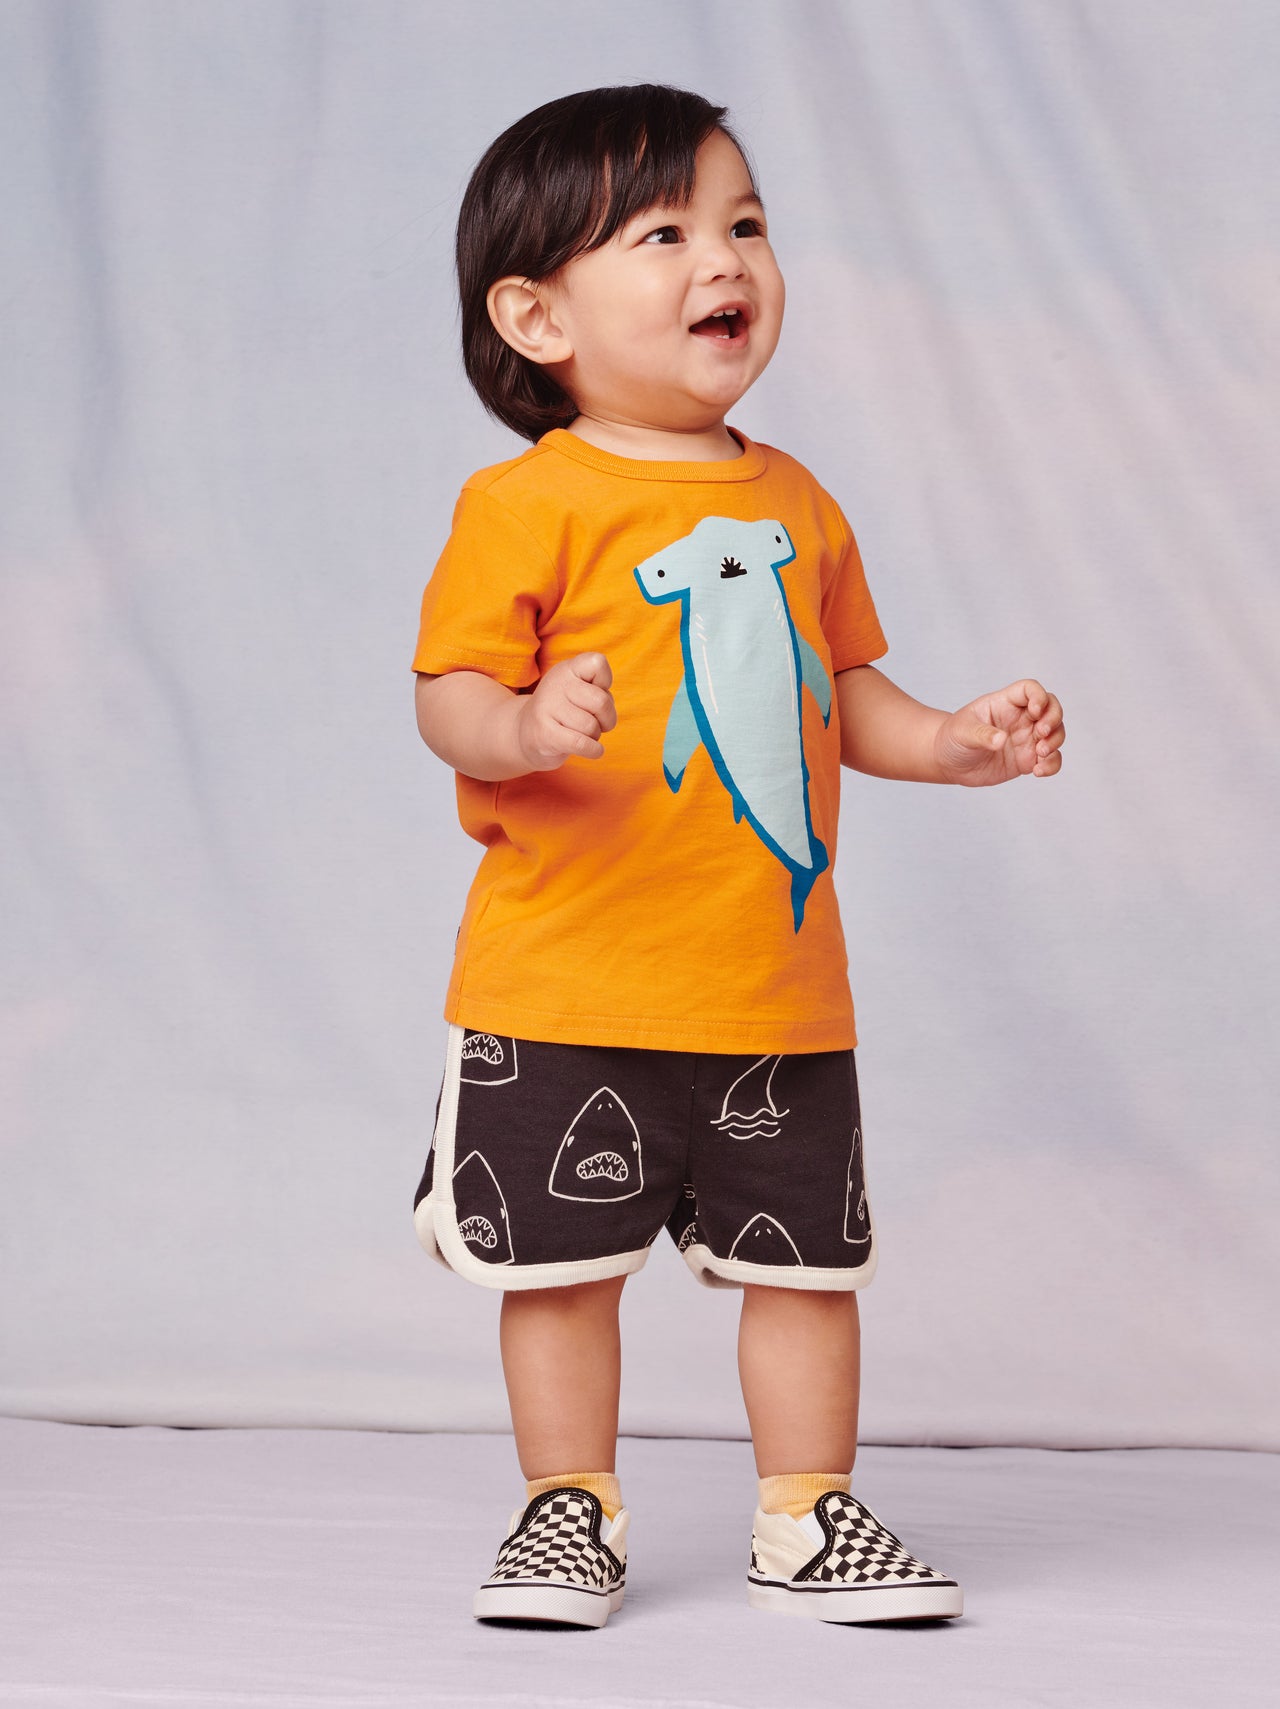 Baby Sport Shorts - Shark Bite